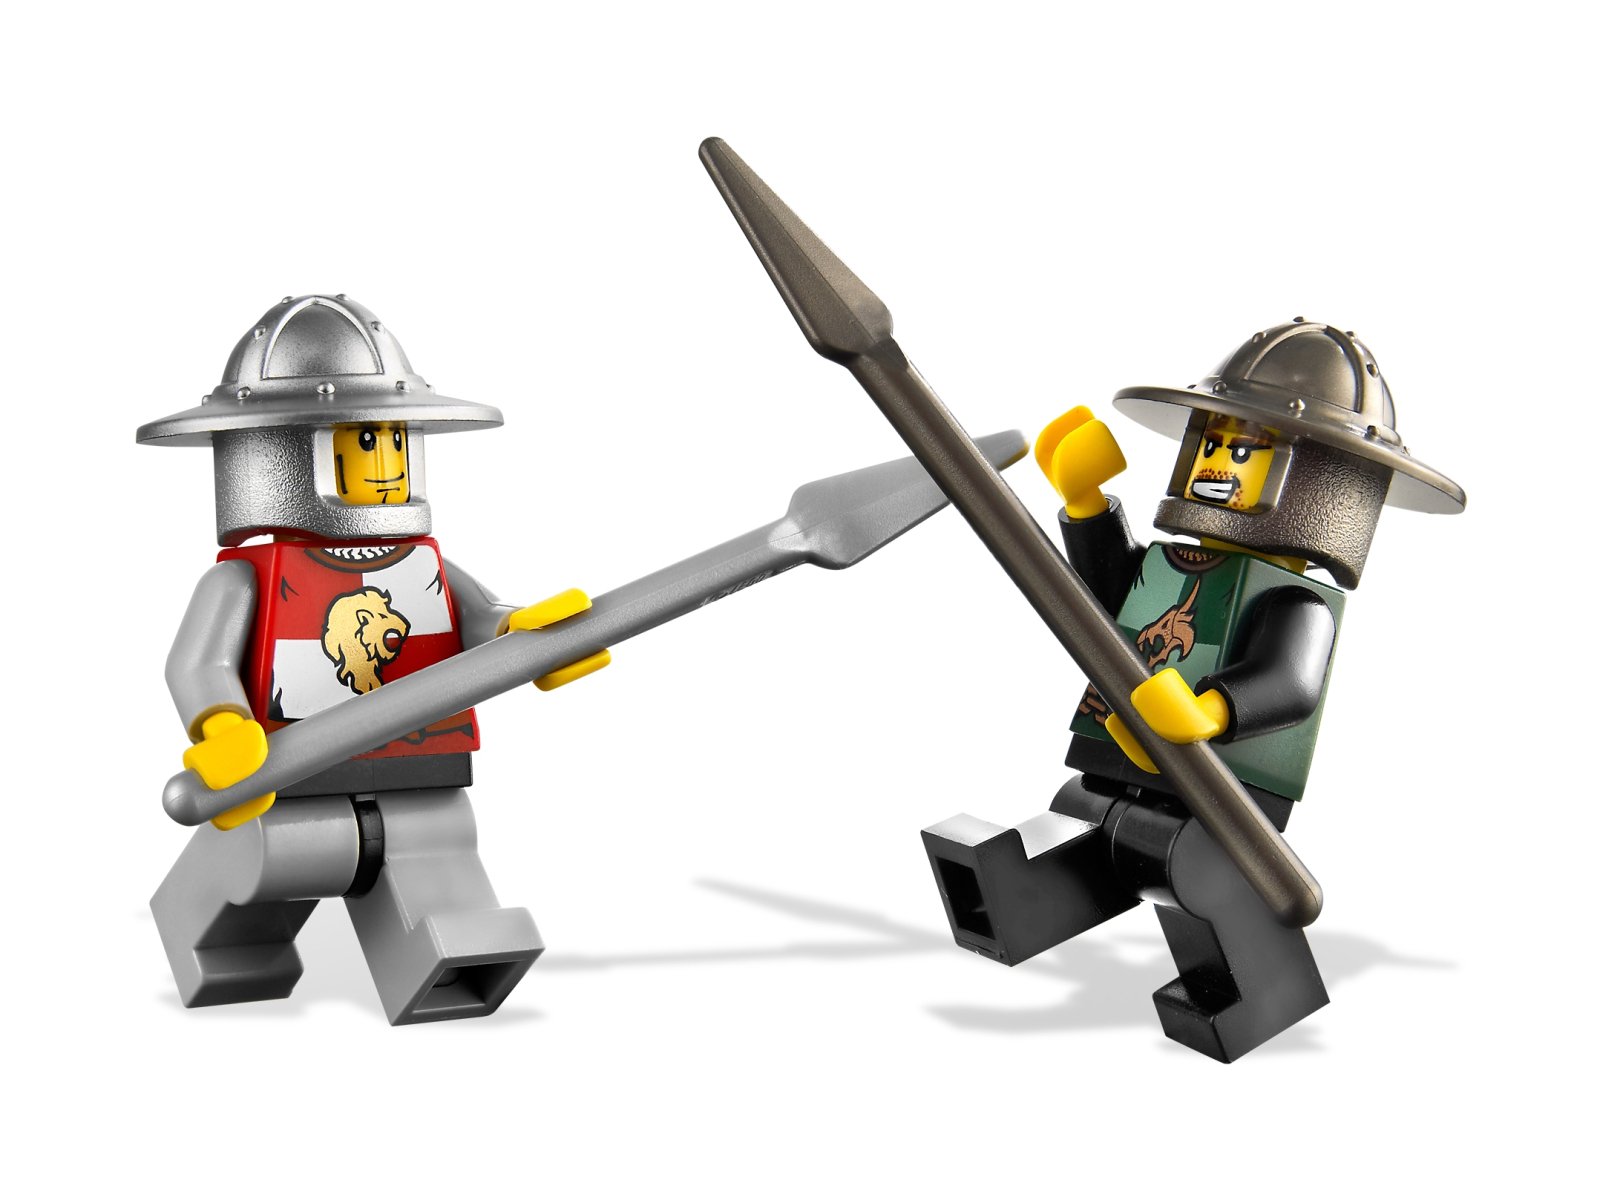 LEGO 7948 Kingdoms Atak na posterunek | zklocków.pl